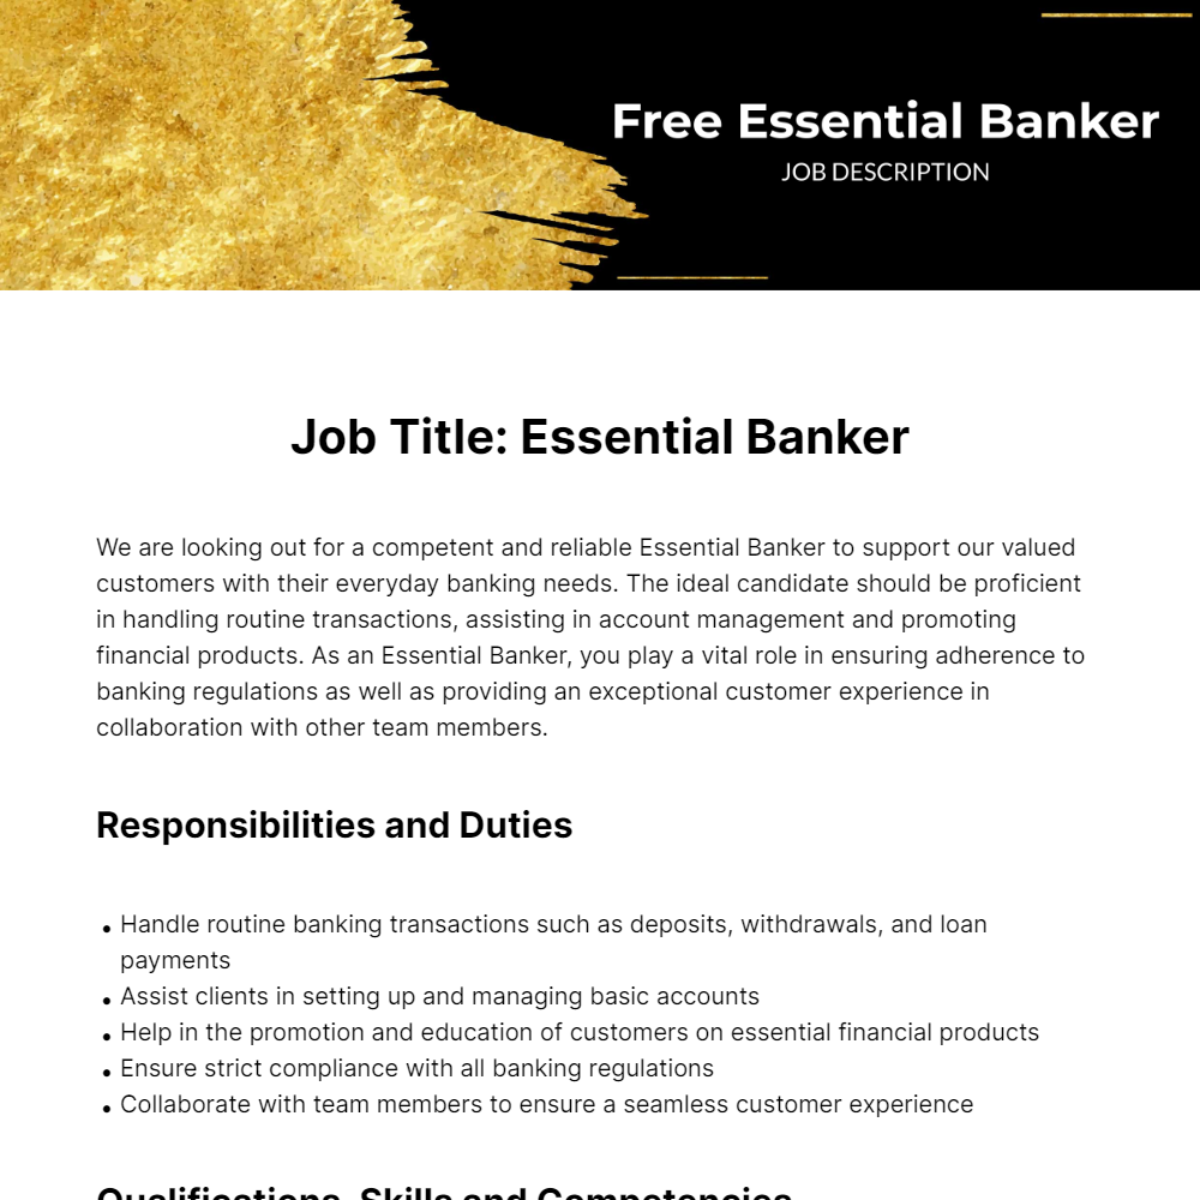 Free Essential Banker Job Description Template